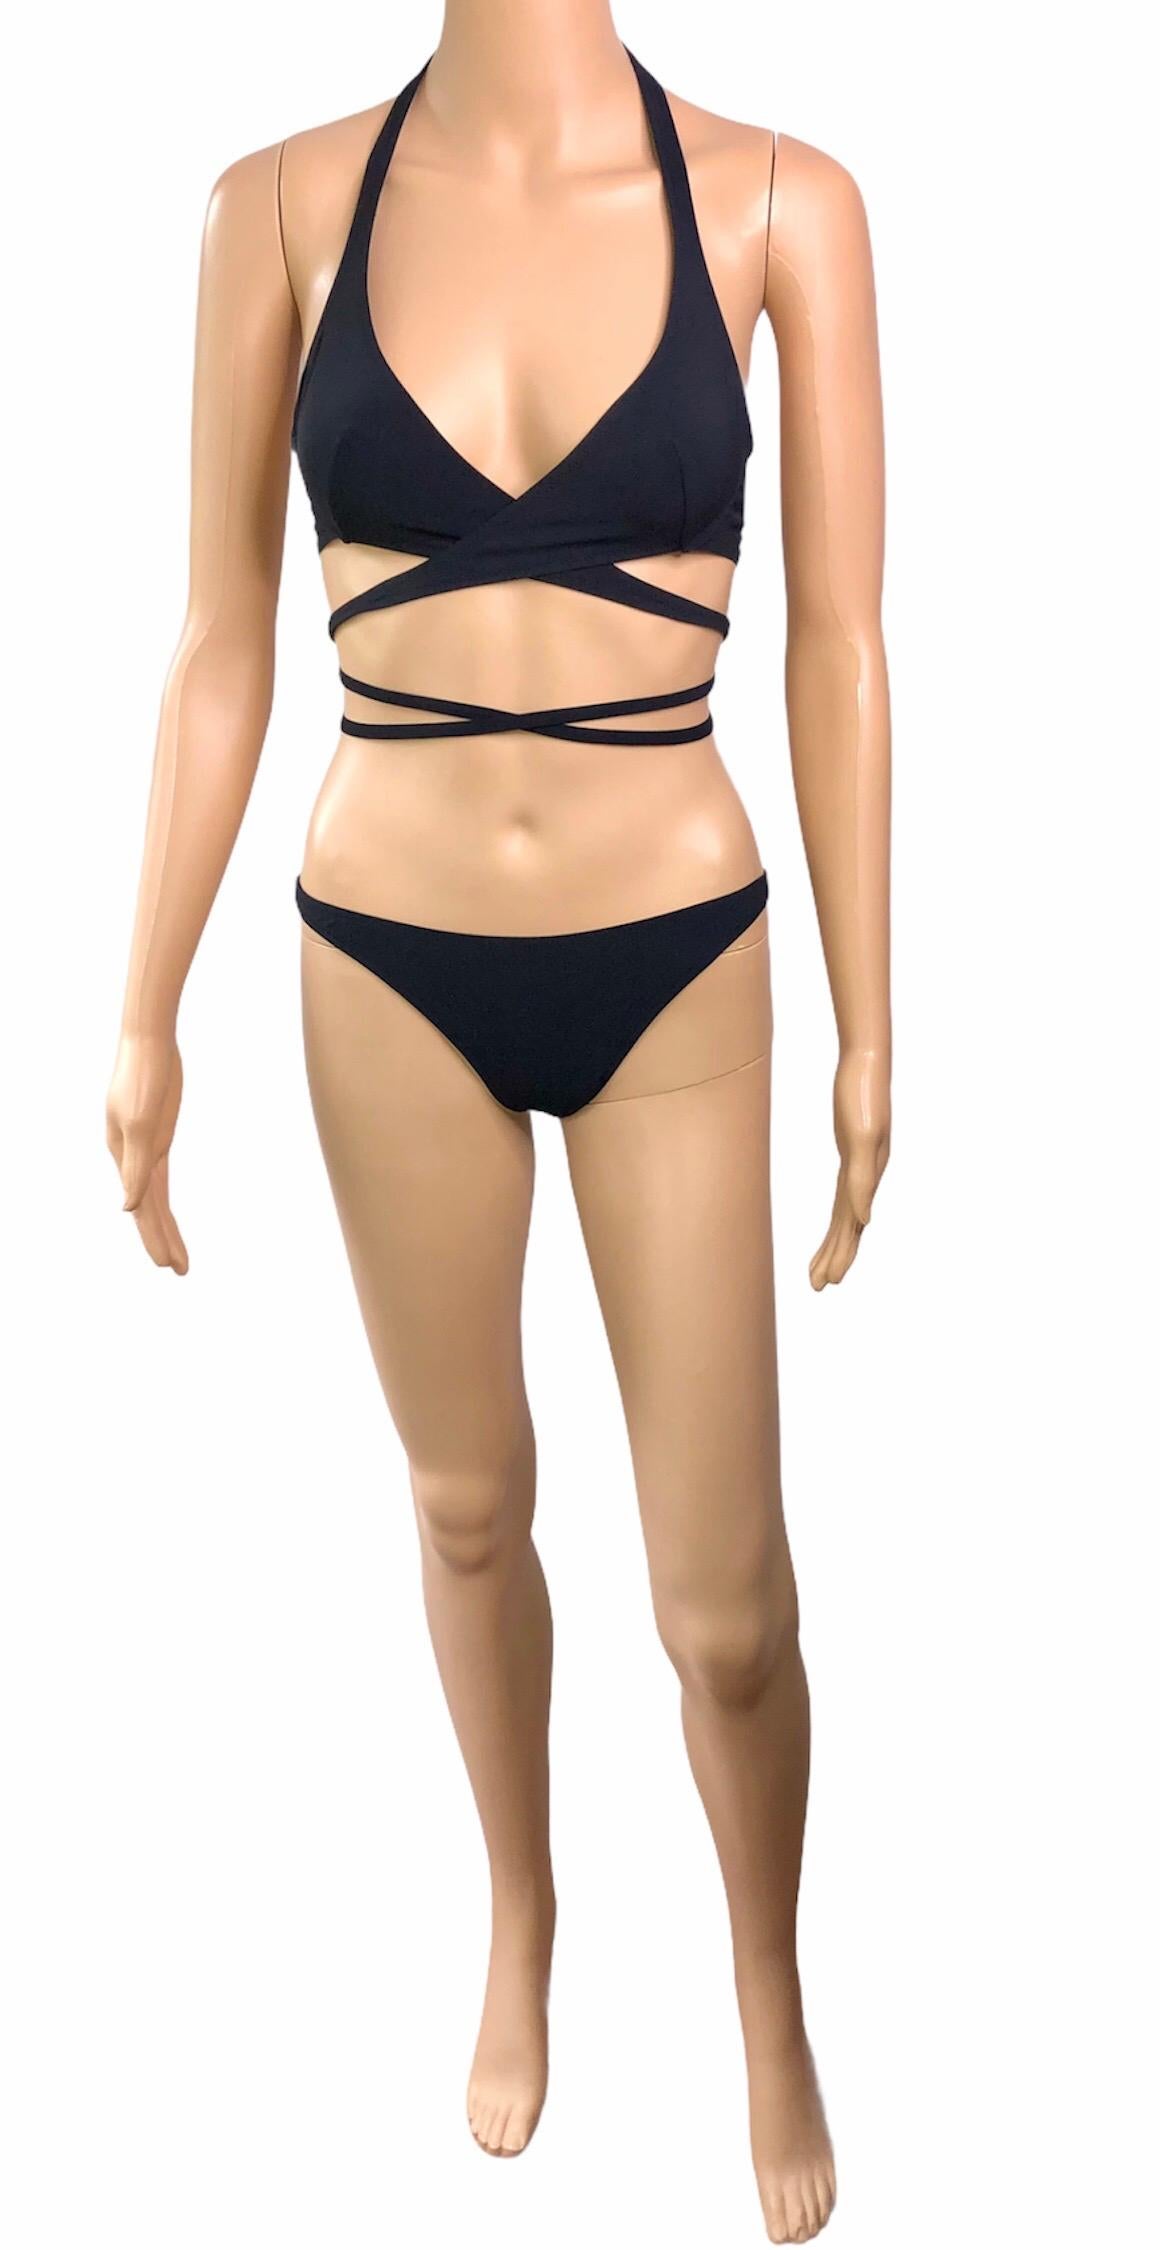 Women's Dolce & Gabbana S/S 2006 Wrap Tie Up Black Bikini Swimwear Swimsuit 2 Piece Set For Sale